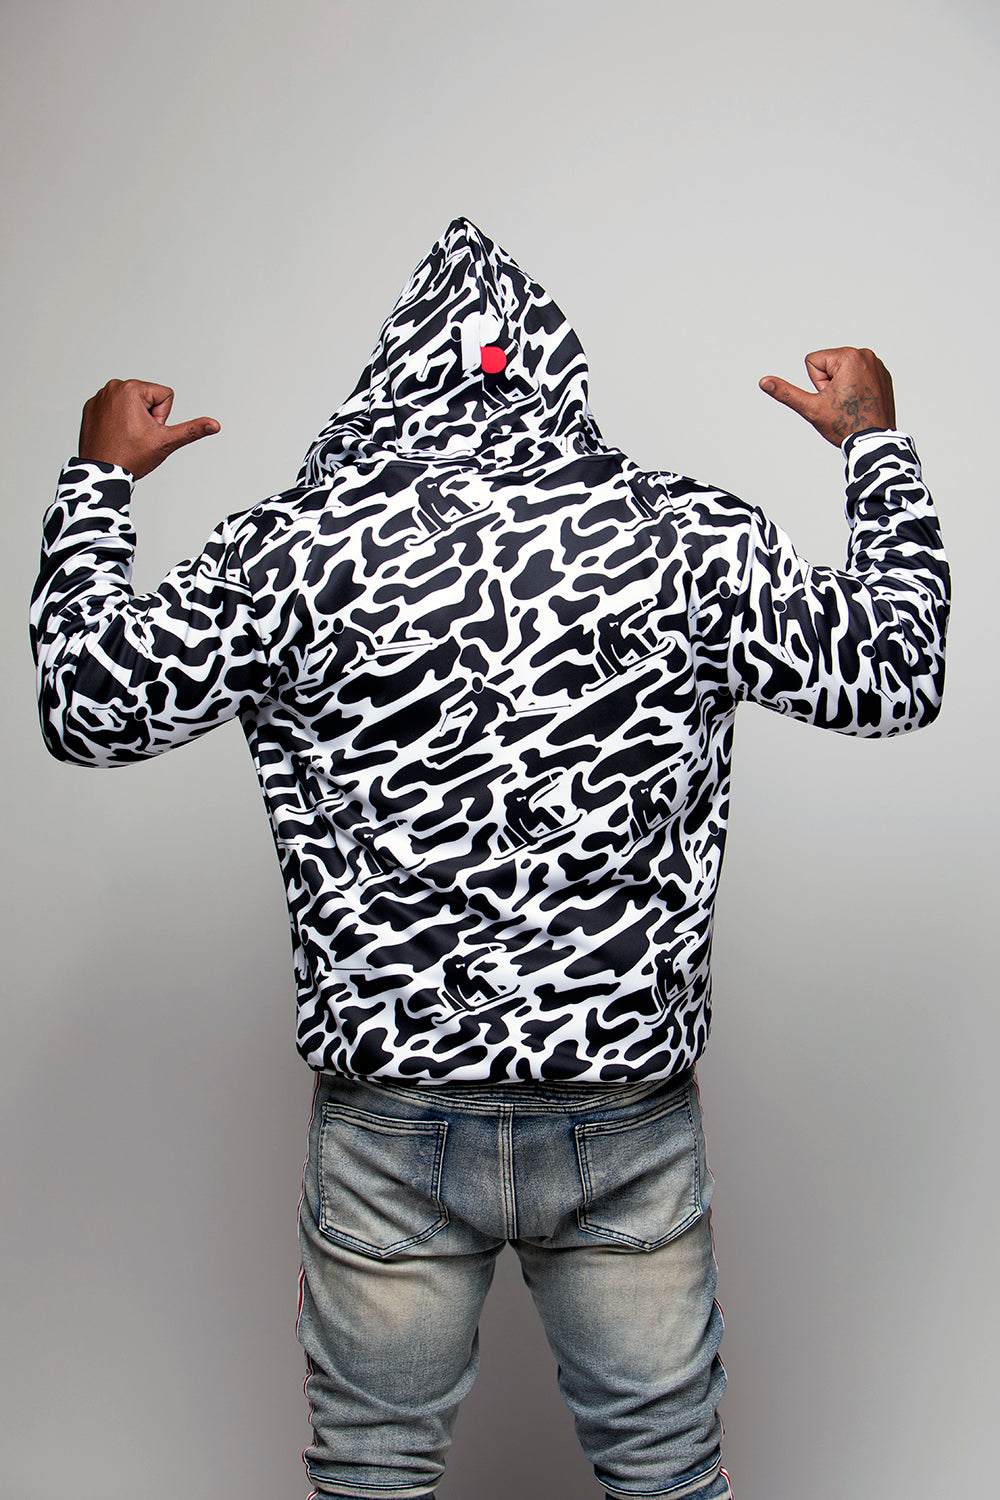 BeastMode Black & White Camo Jacket with Hood